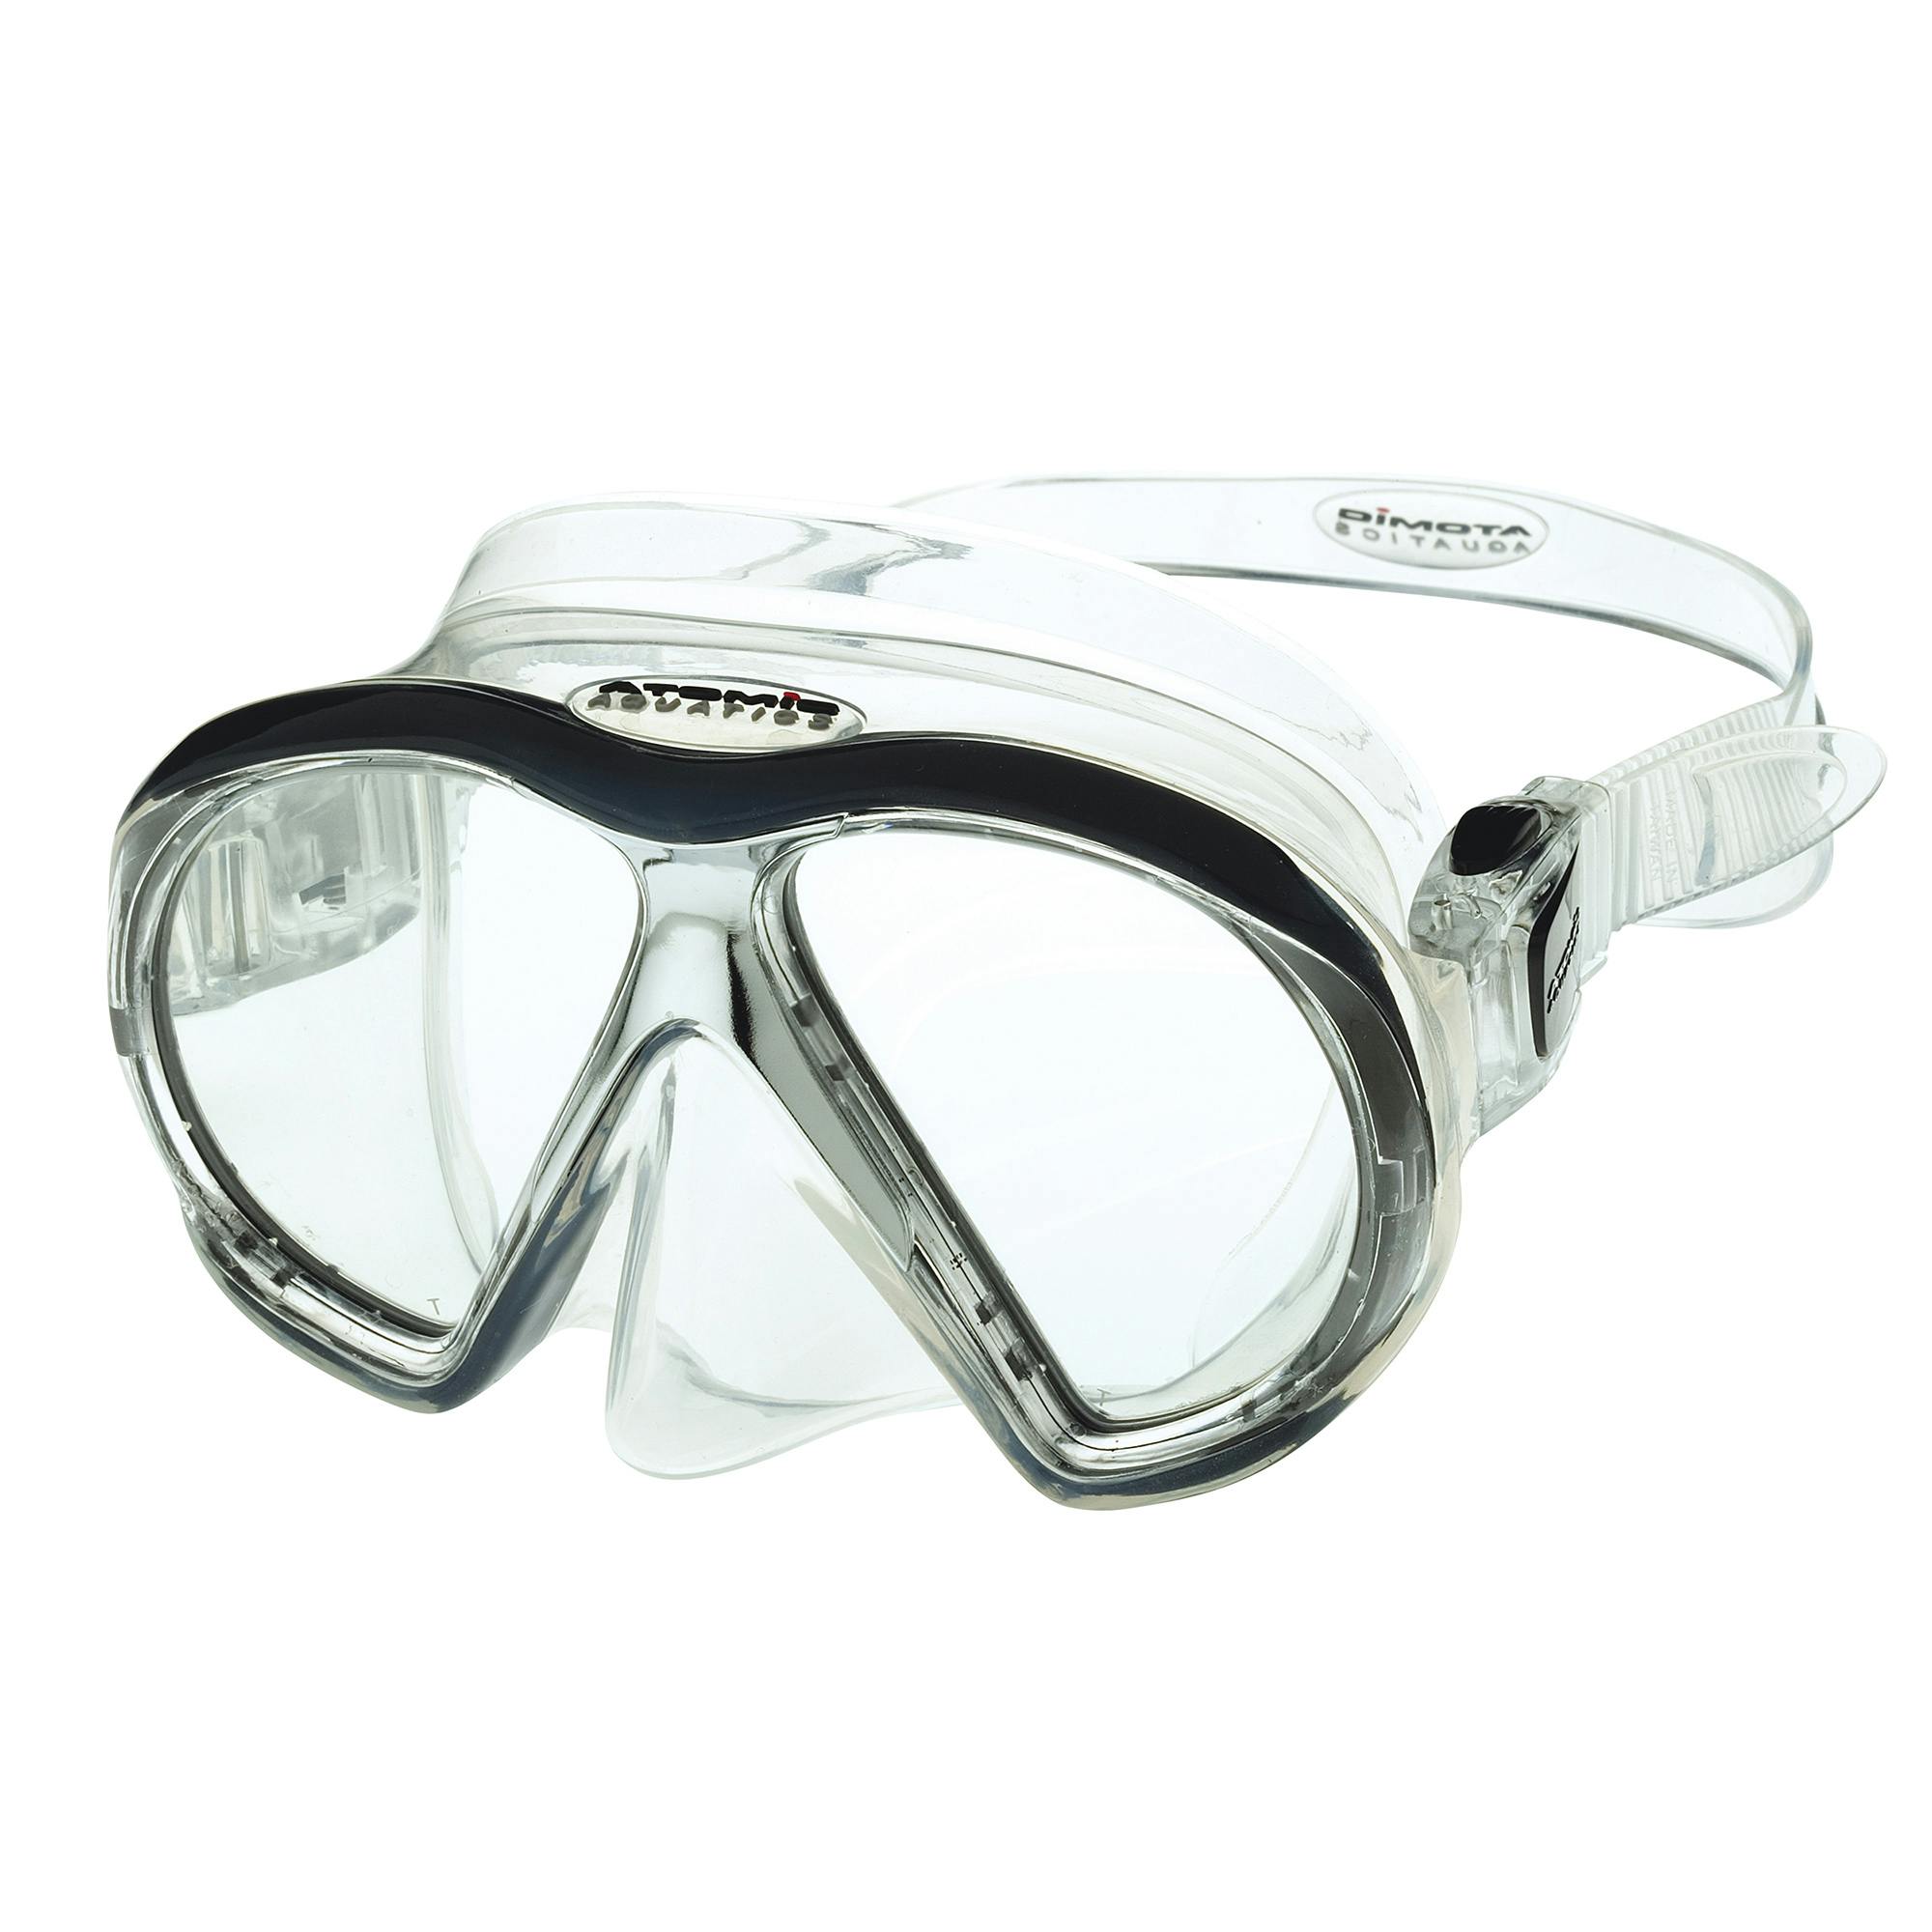 Atomic SubFrame Mask, Two Lens (Medium Fit) - Clear/Black